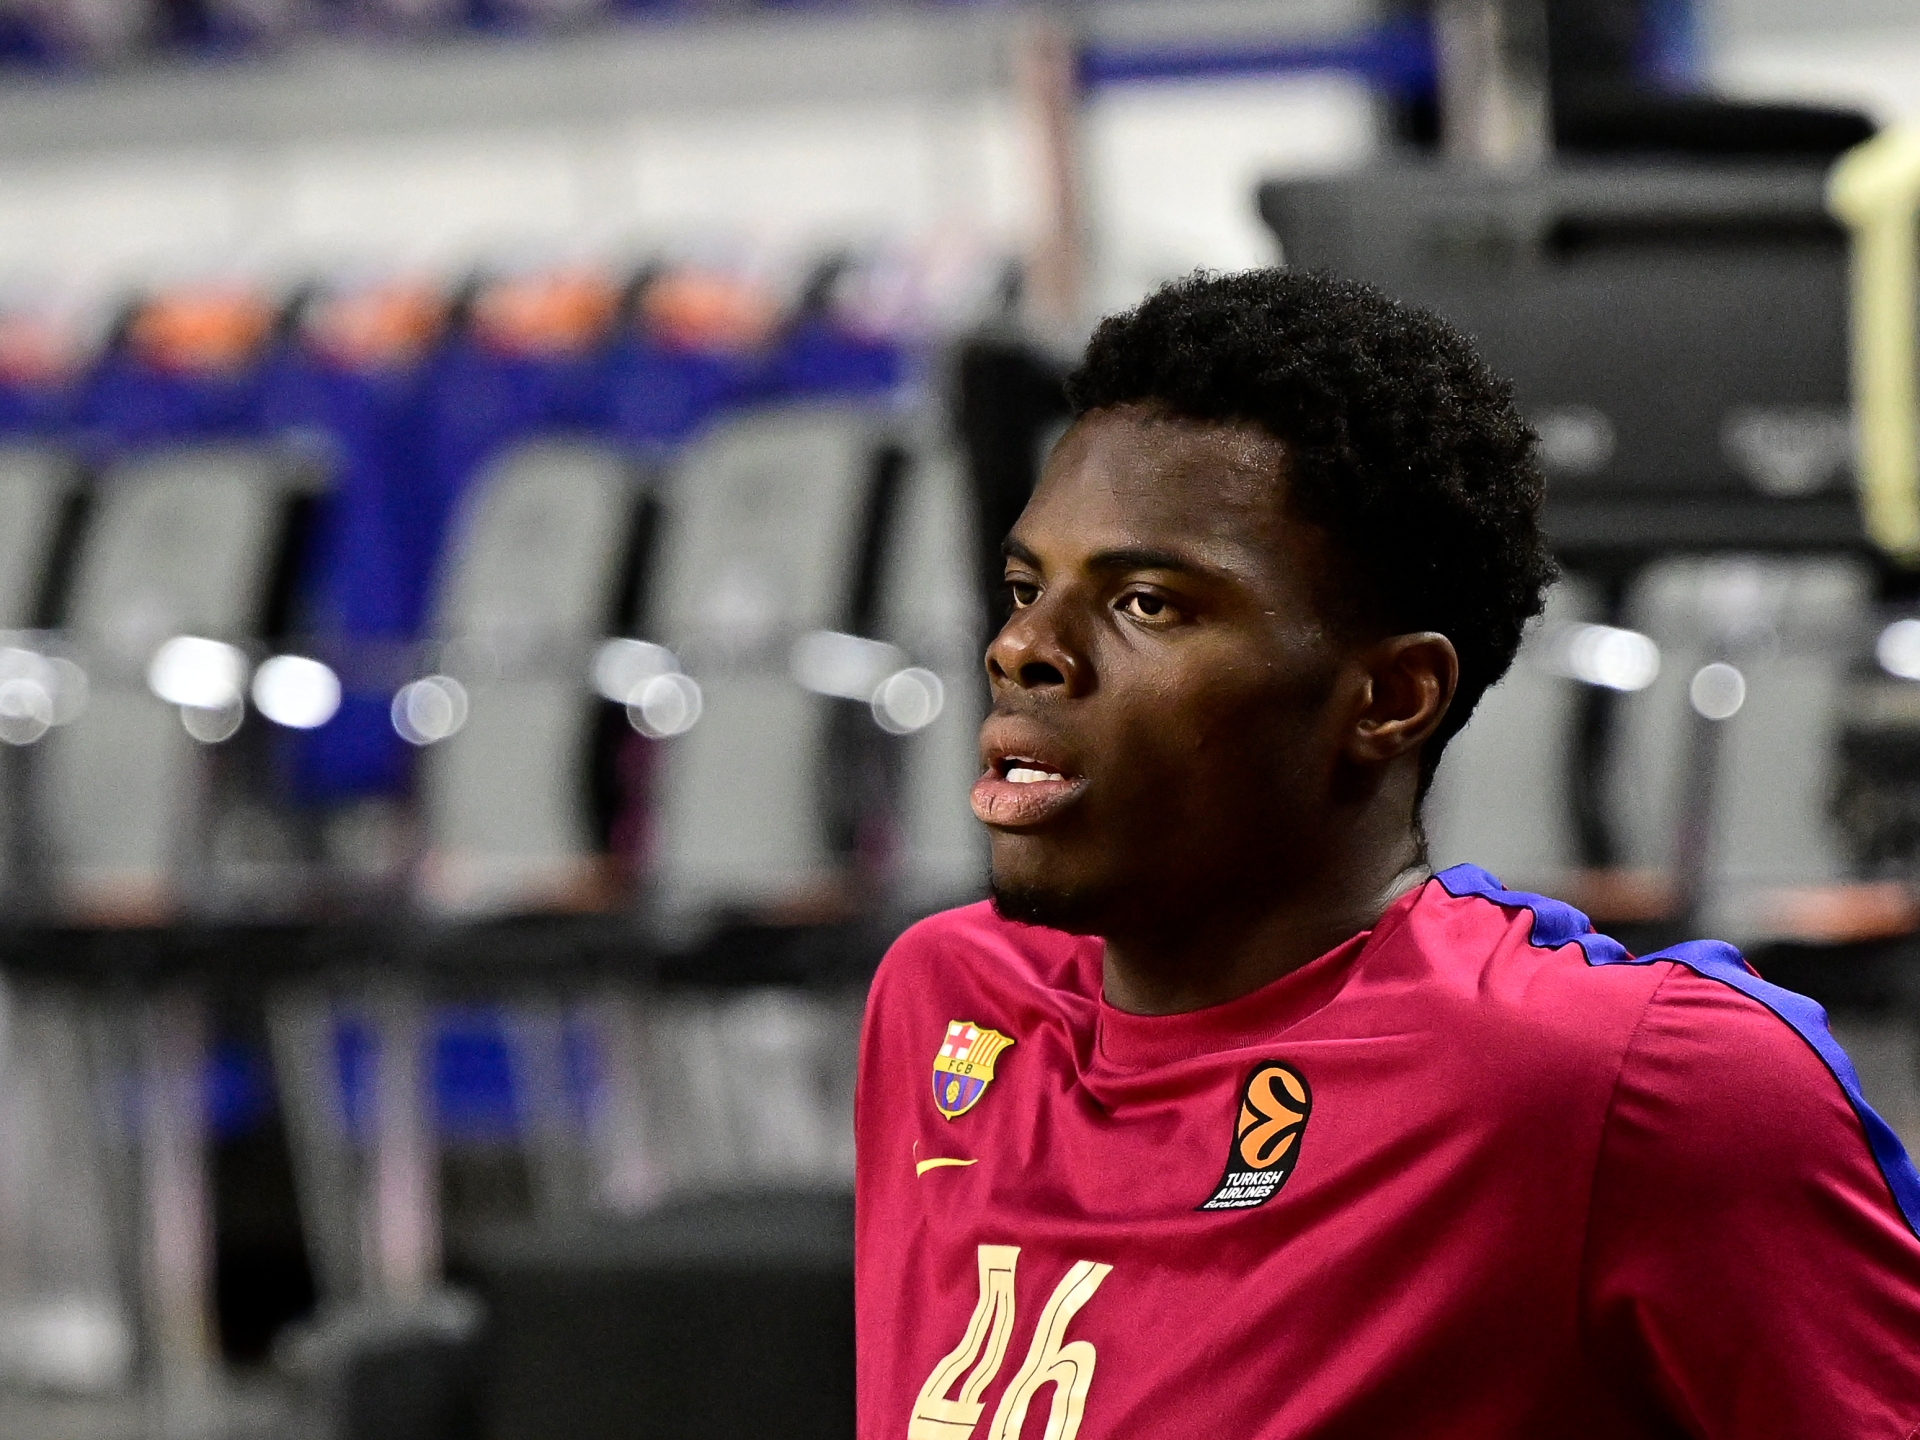 Time de basquete do Barcelona condena abuso racista de jogador nigeriano